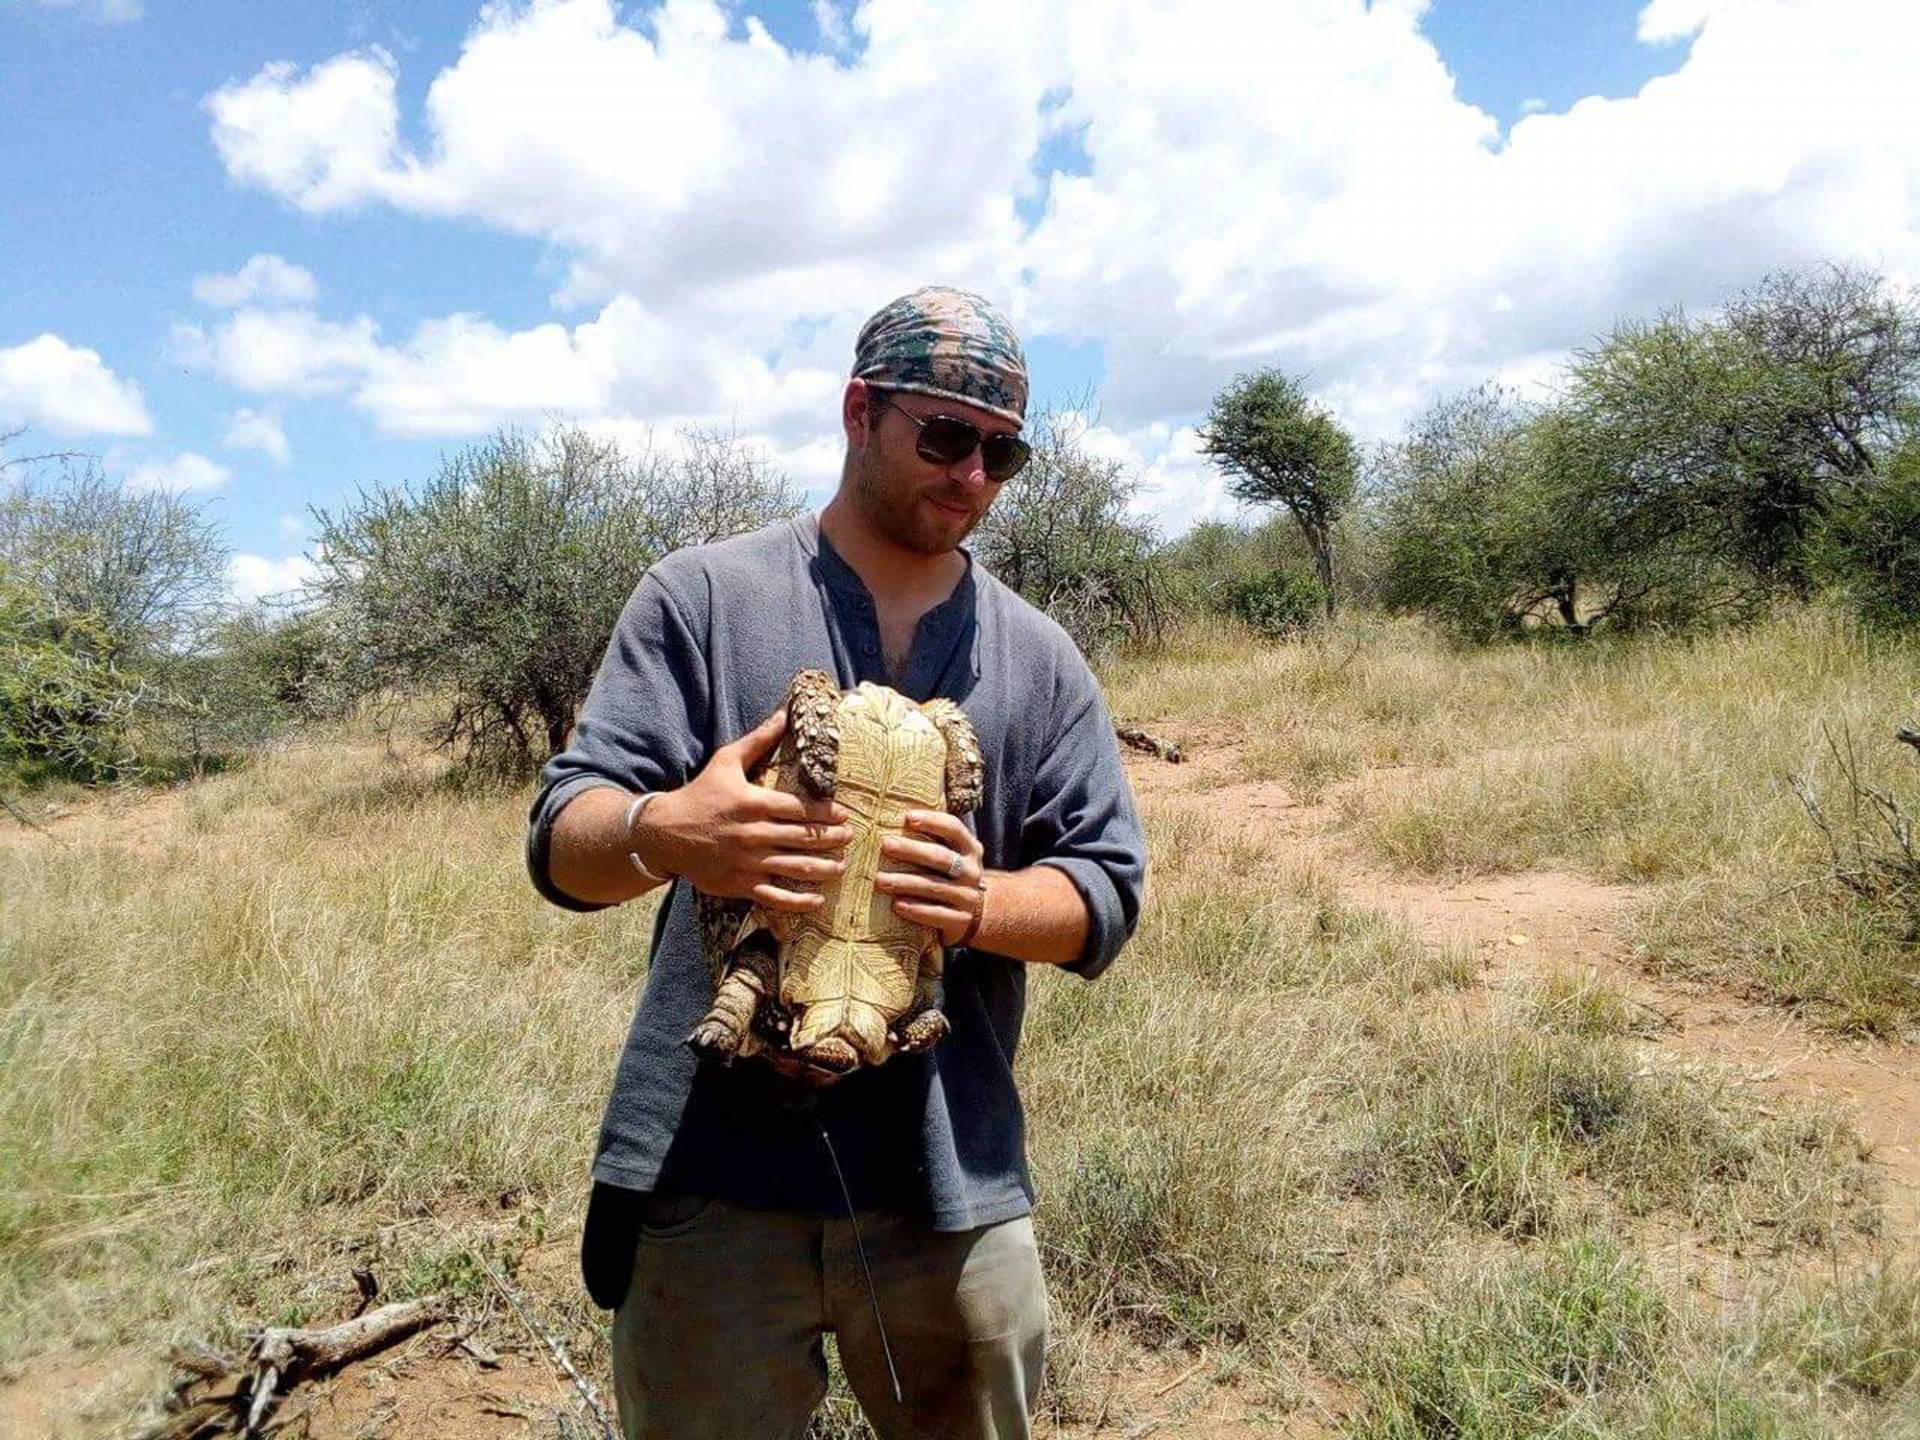 Daniel Petticord outside holding a tortoise